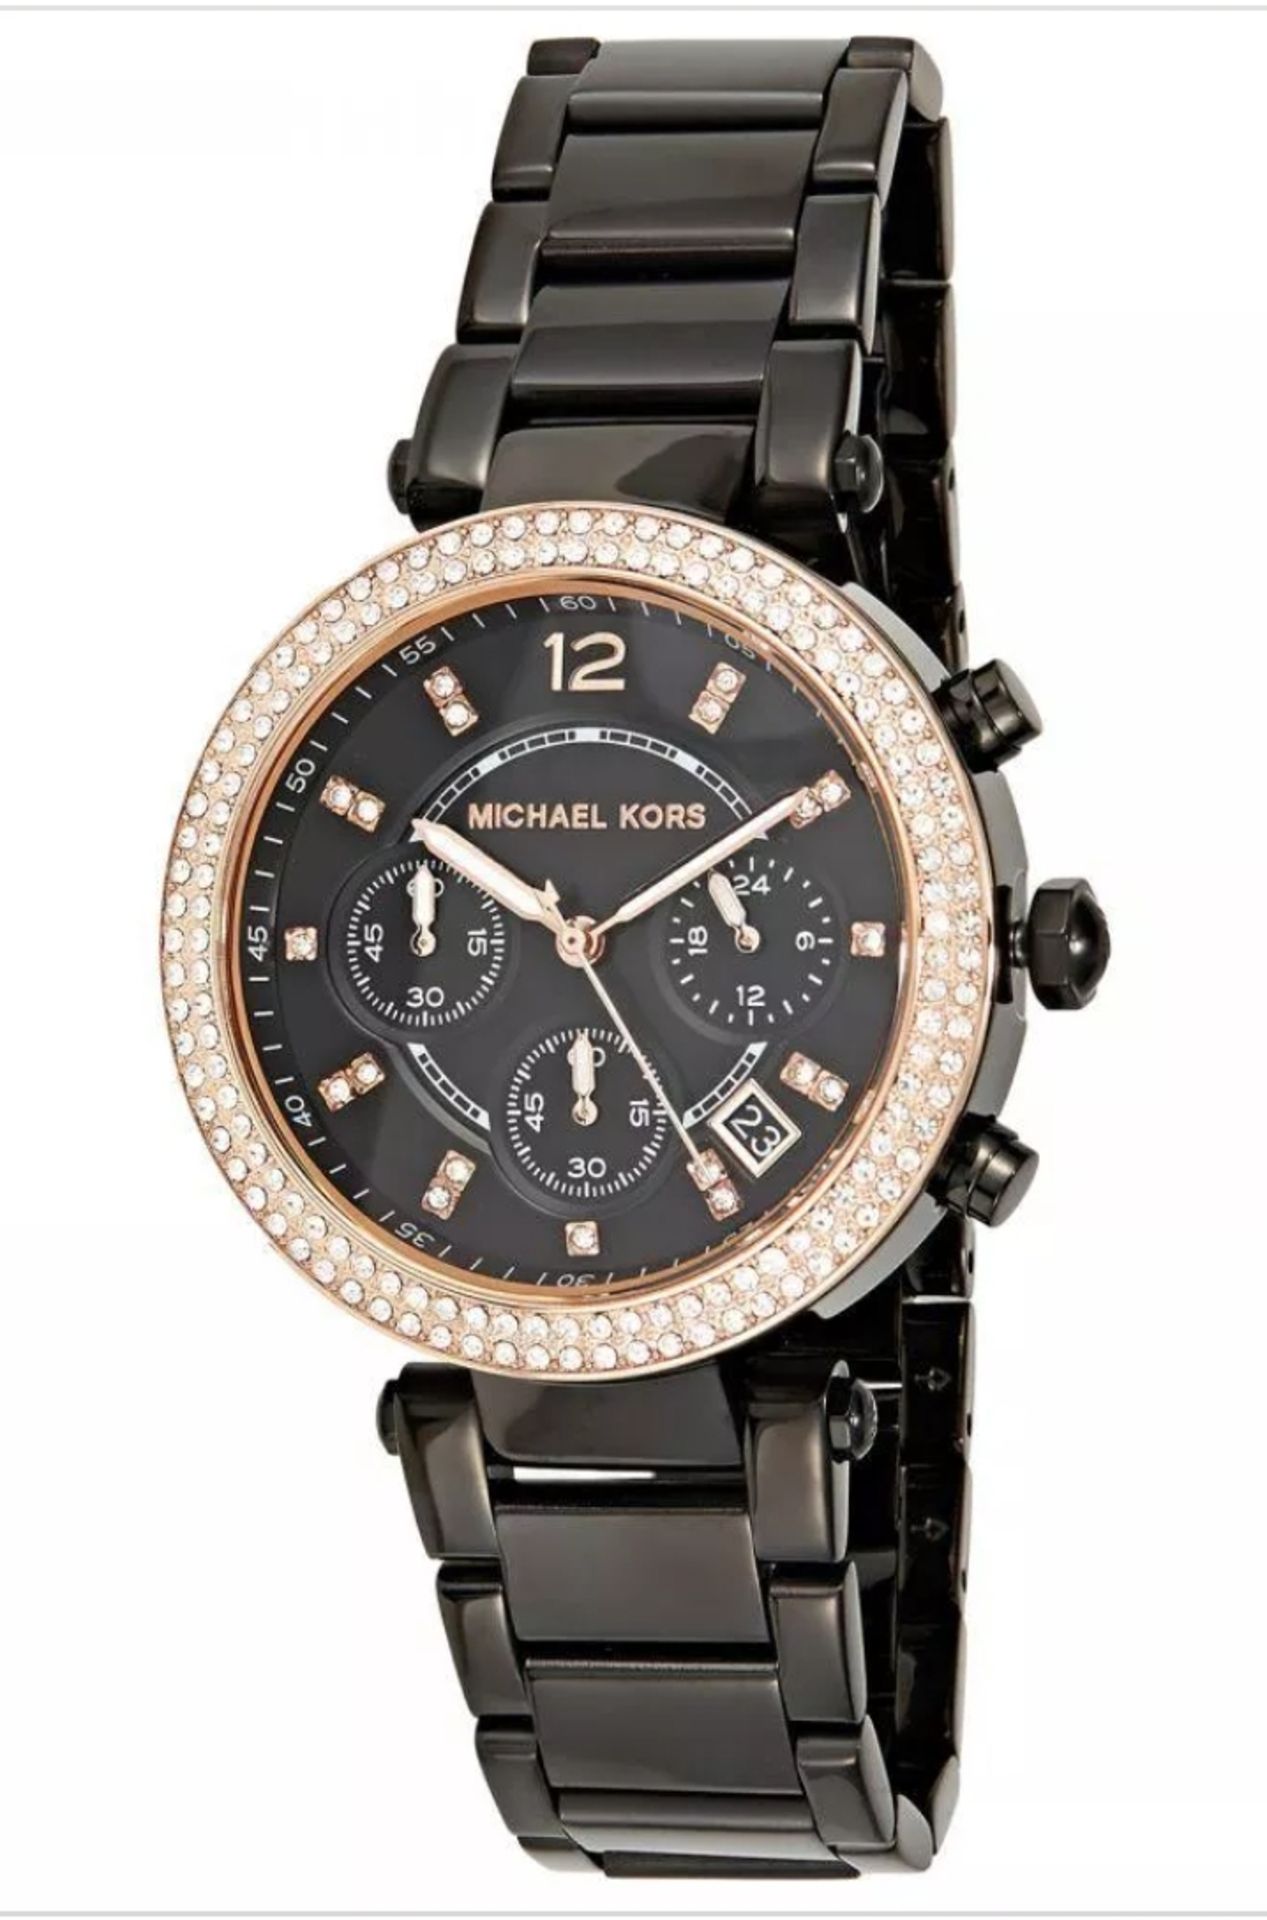 Michael Kors MK5885 Ladies Parker Chronograph Watch - Image 7 of 9